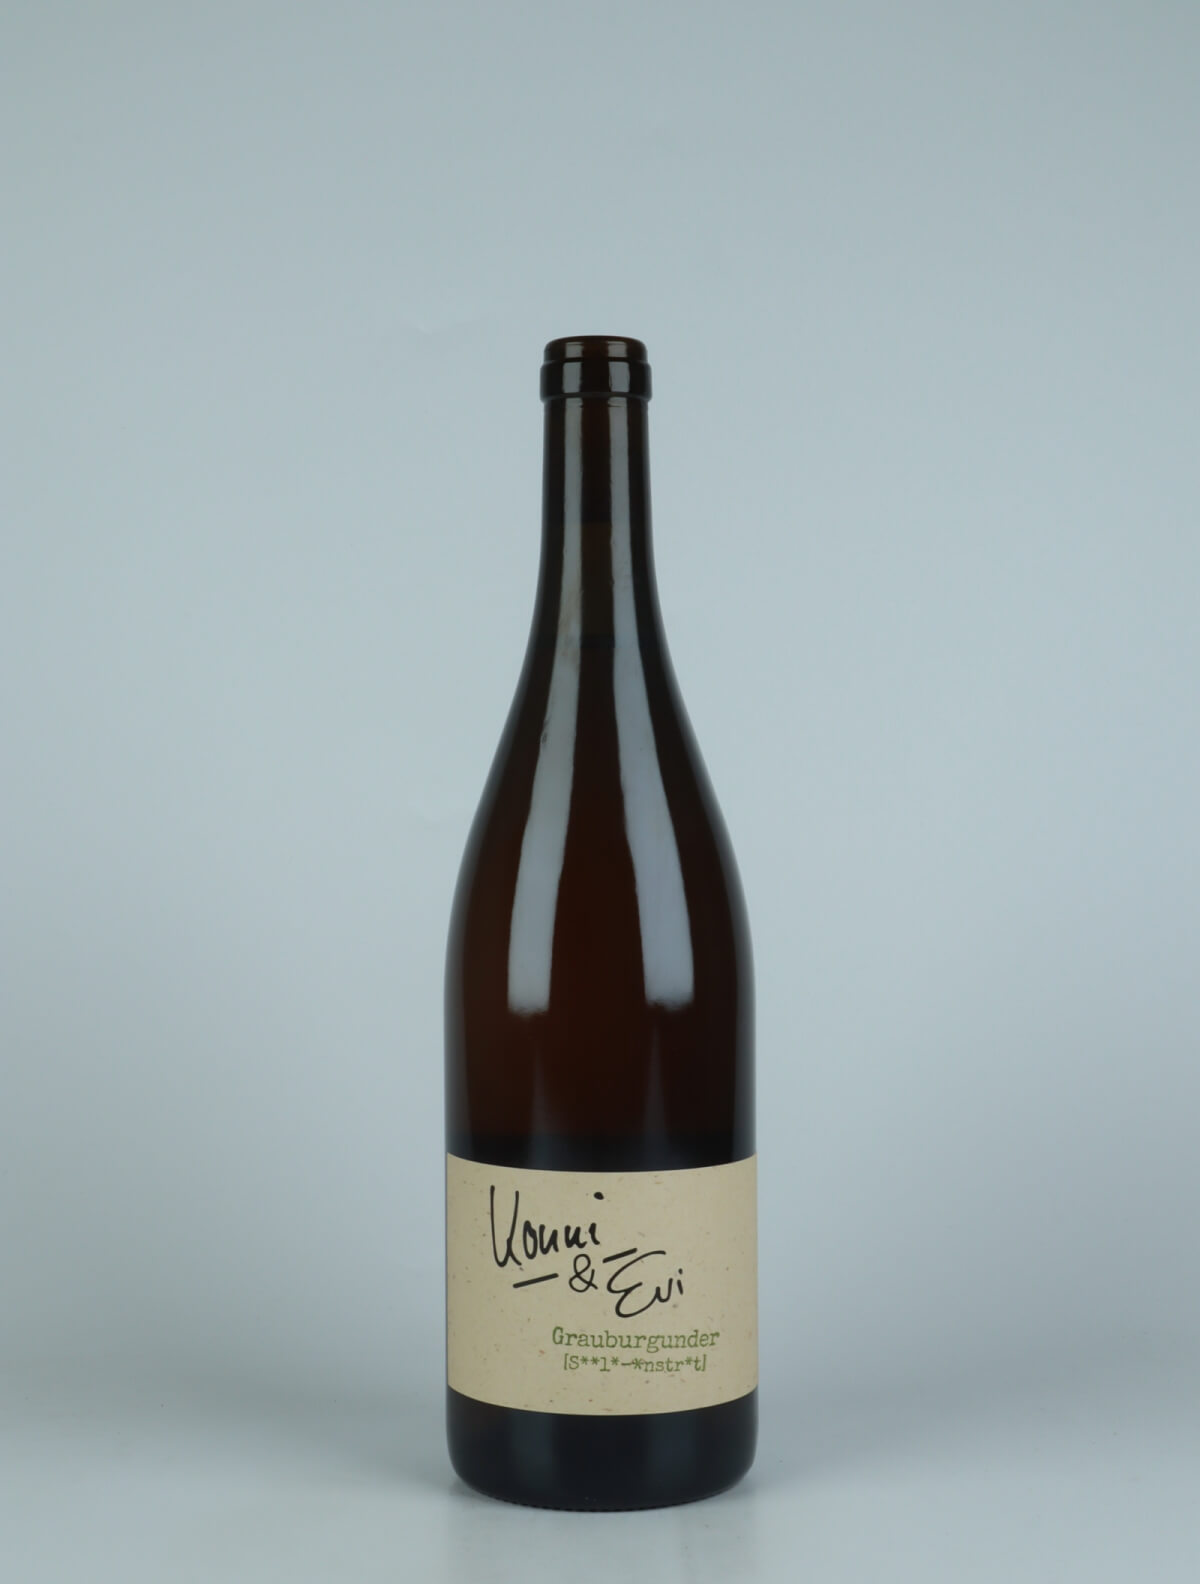 A bottle 2021 Grauburgunder White wine from Konni & Evi, Saale-Unstrut in Germany